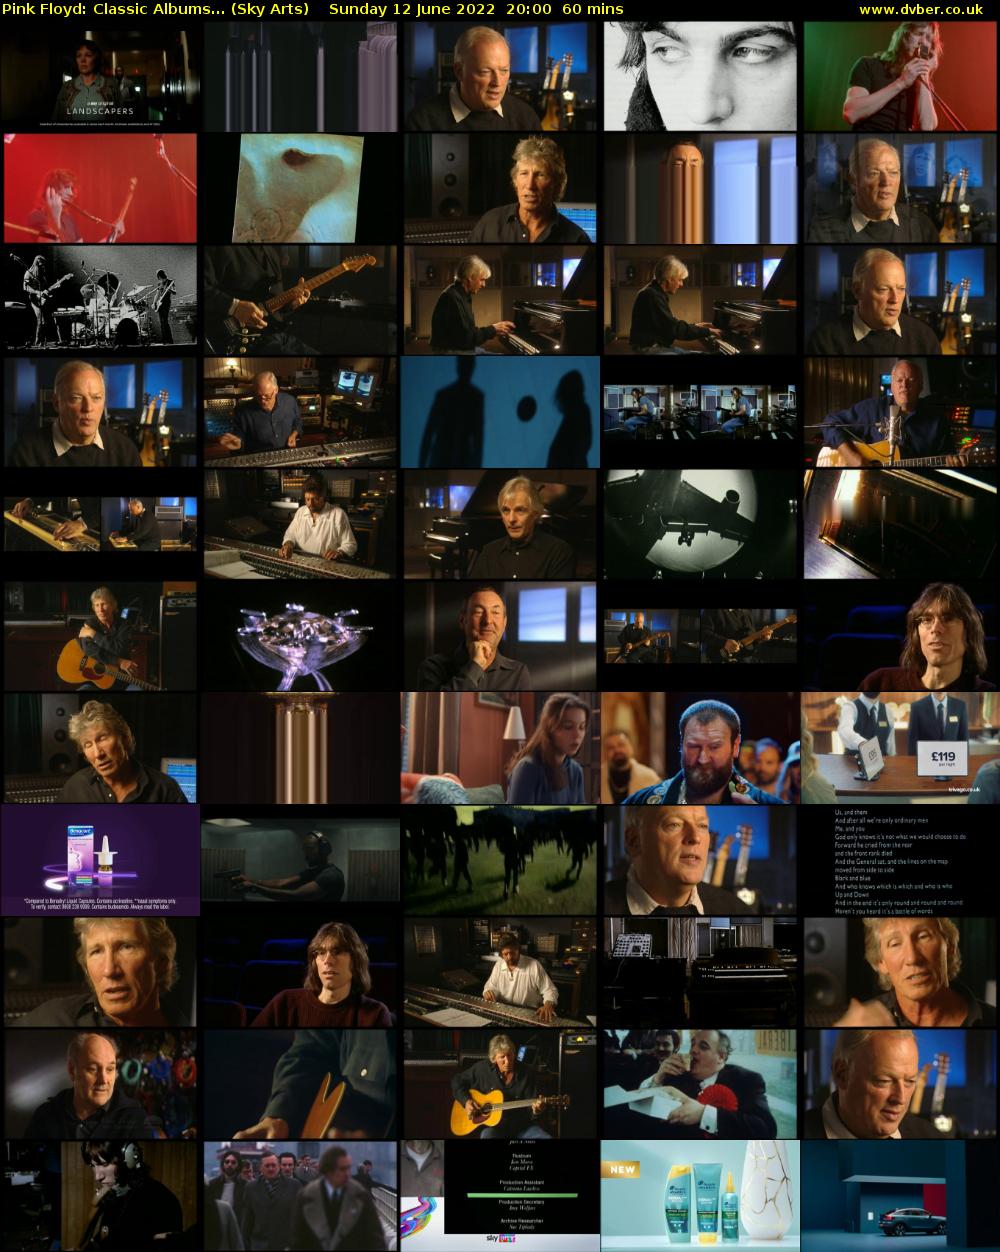 Pink Floyd: Classic Albums... (Sky Arts) Sunday 12 June 2022 20:00 - 21:00